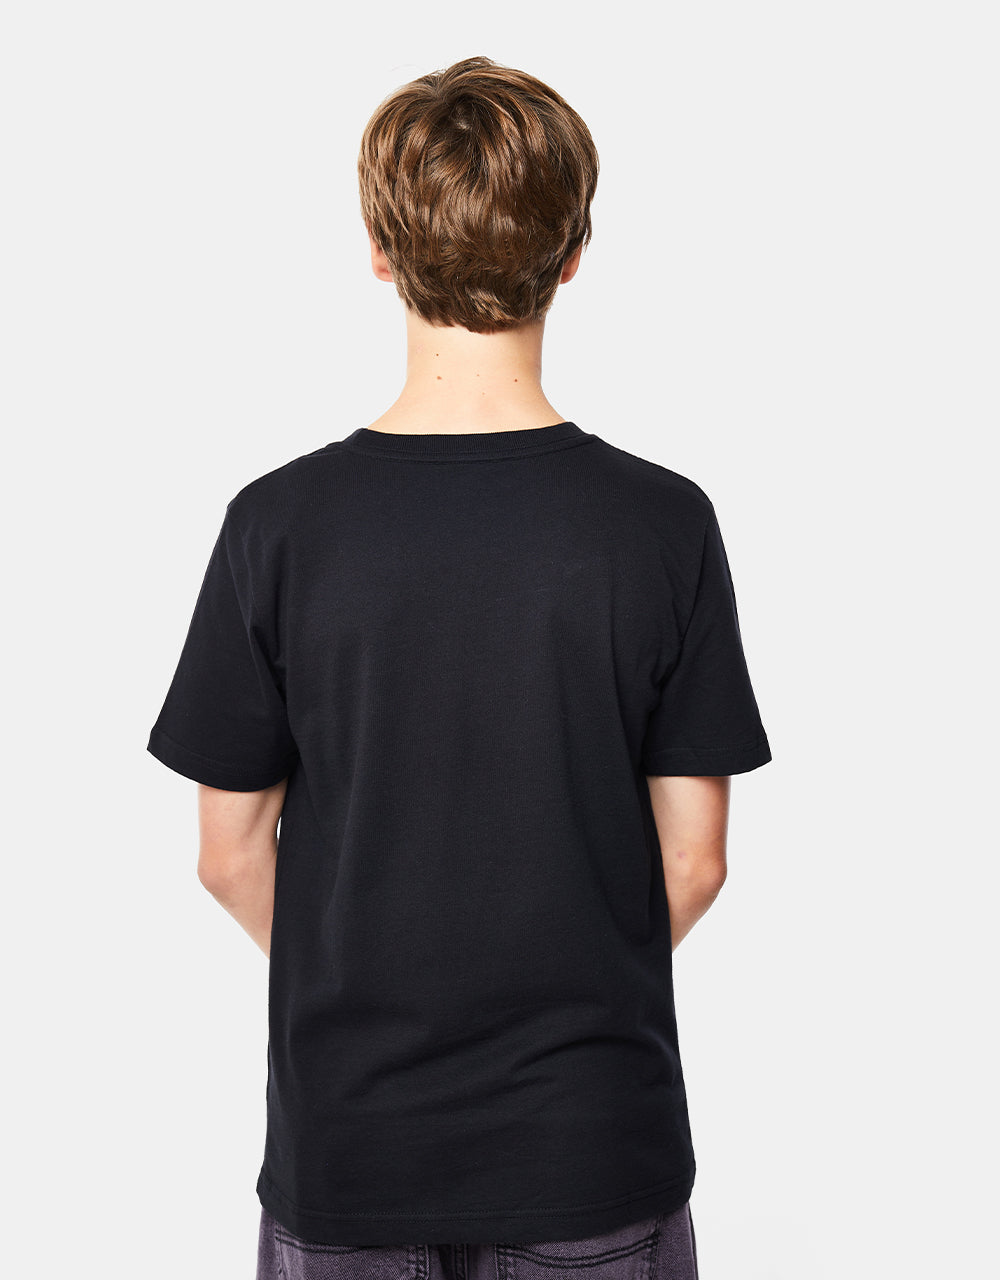 DC Square Star Kids T-Shirt - Black